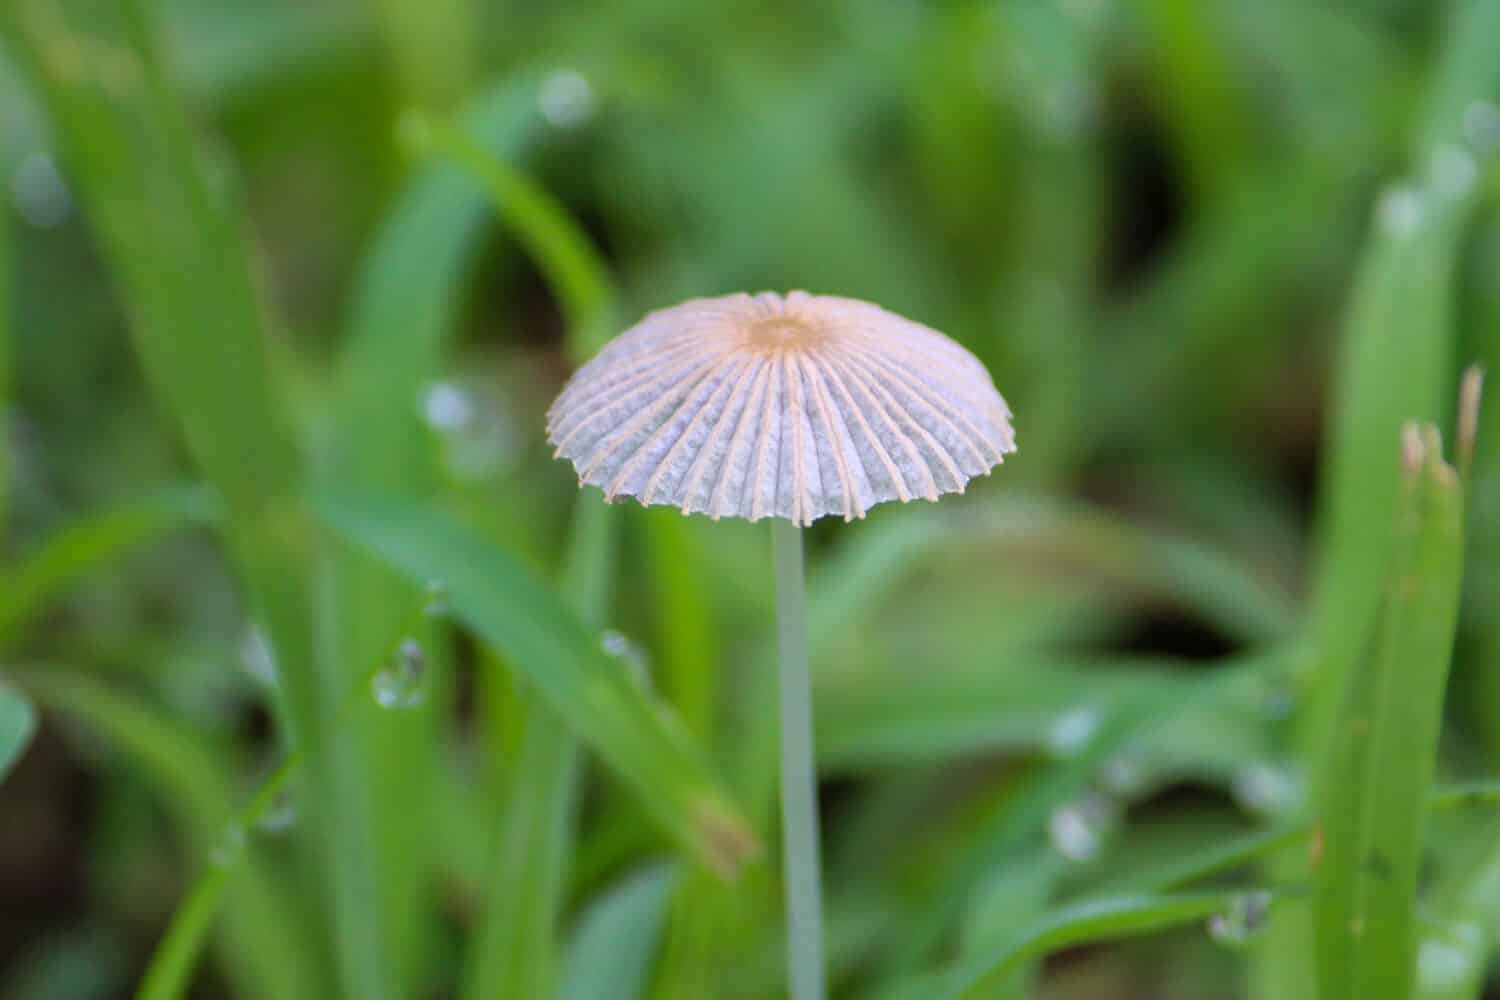 A closeup shot of a Parasola plicatilis mushroom on a blurred background